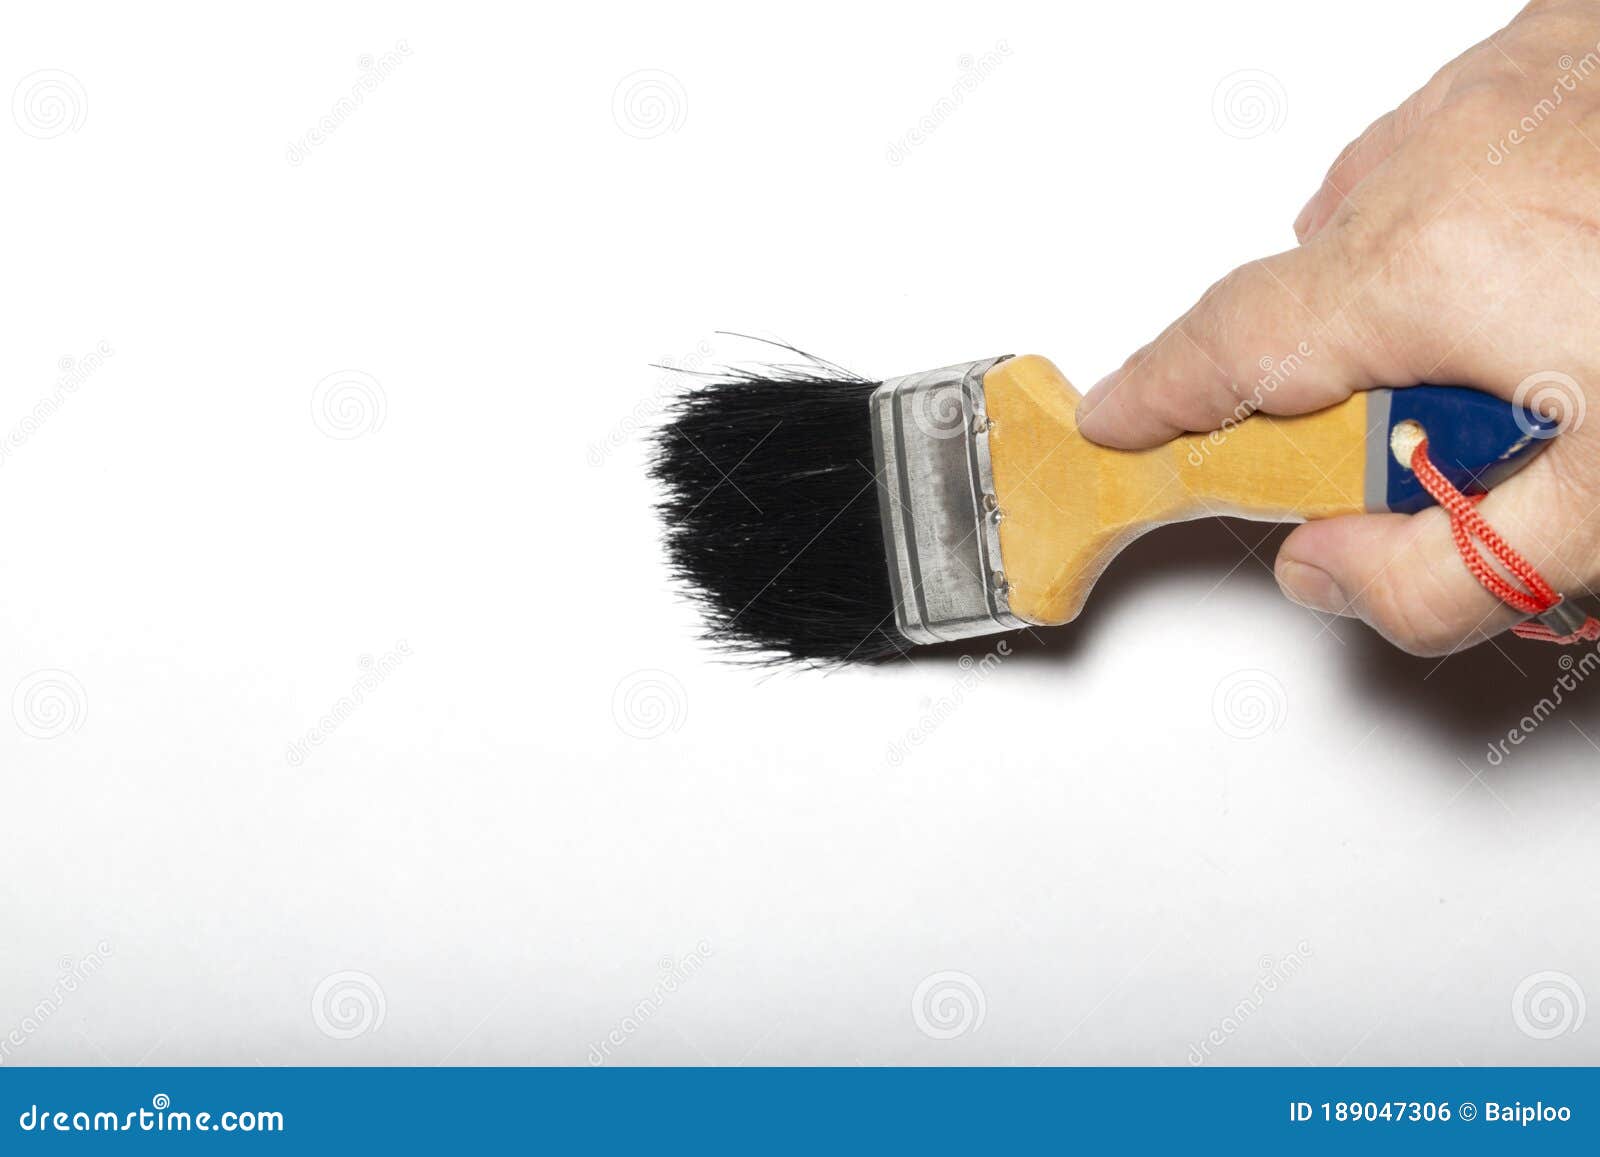 Hand Holding Big Paint Brush, without Paint , Isolated on White Background  Stock Photo - Image of painter, work: 189047306